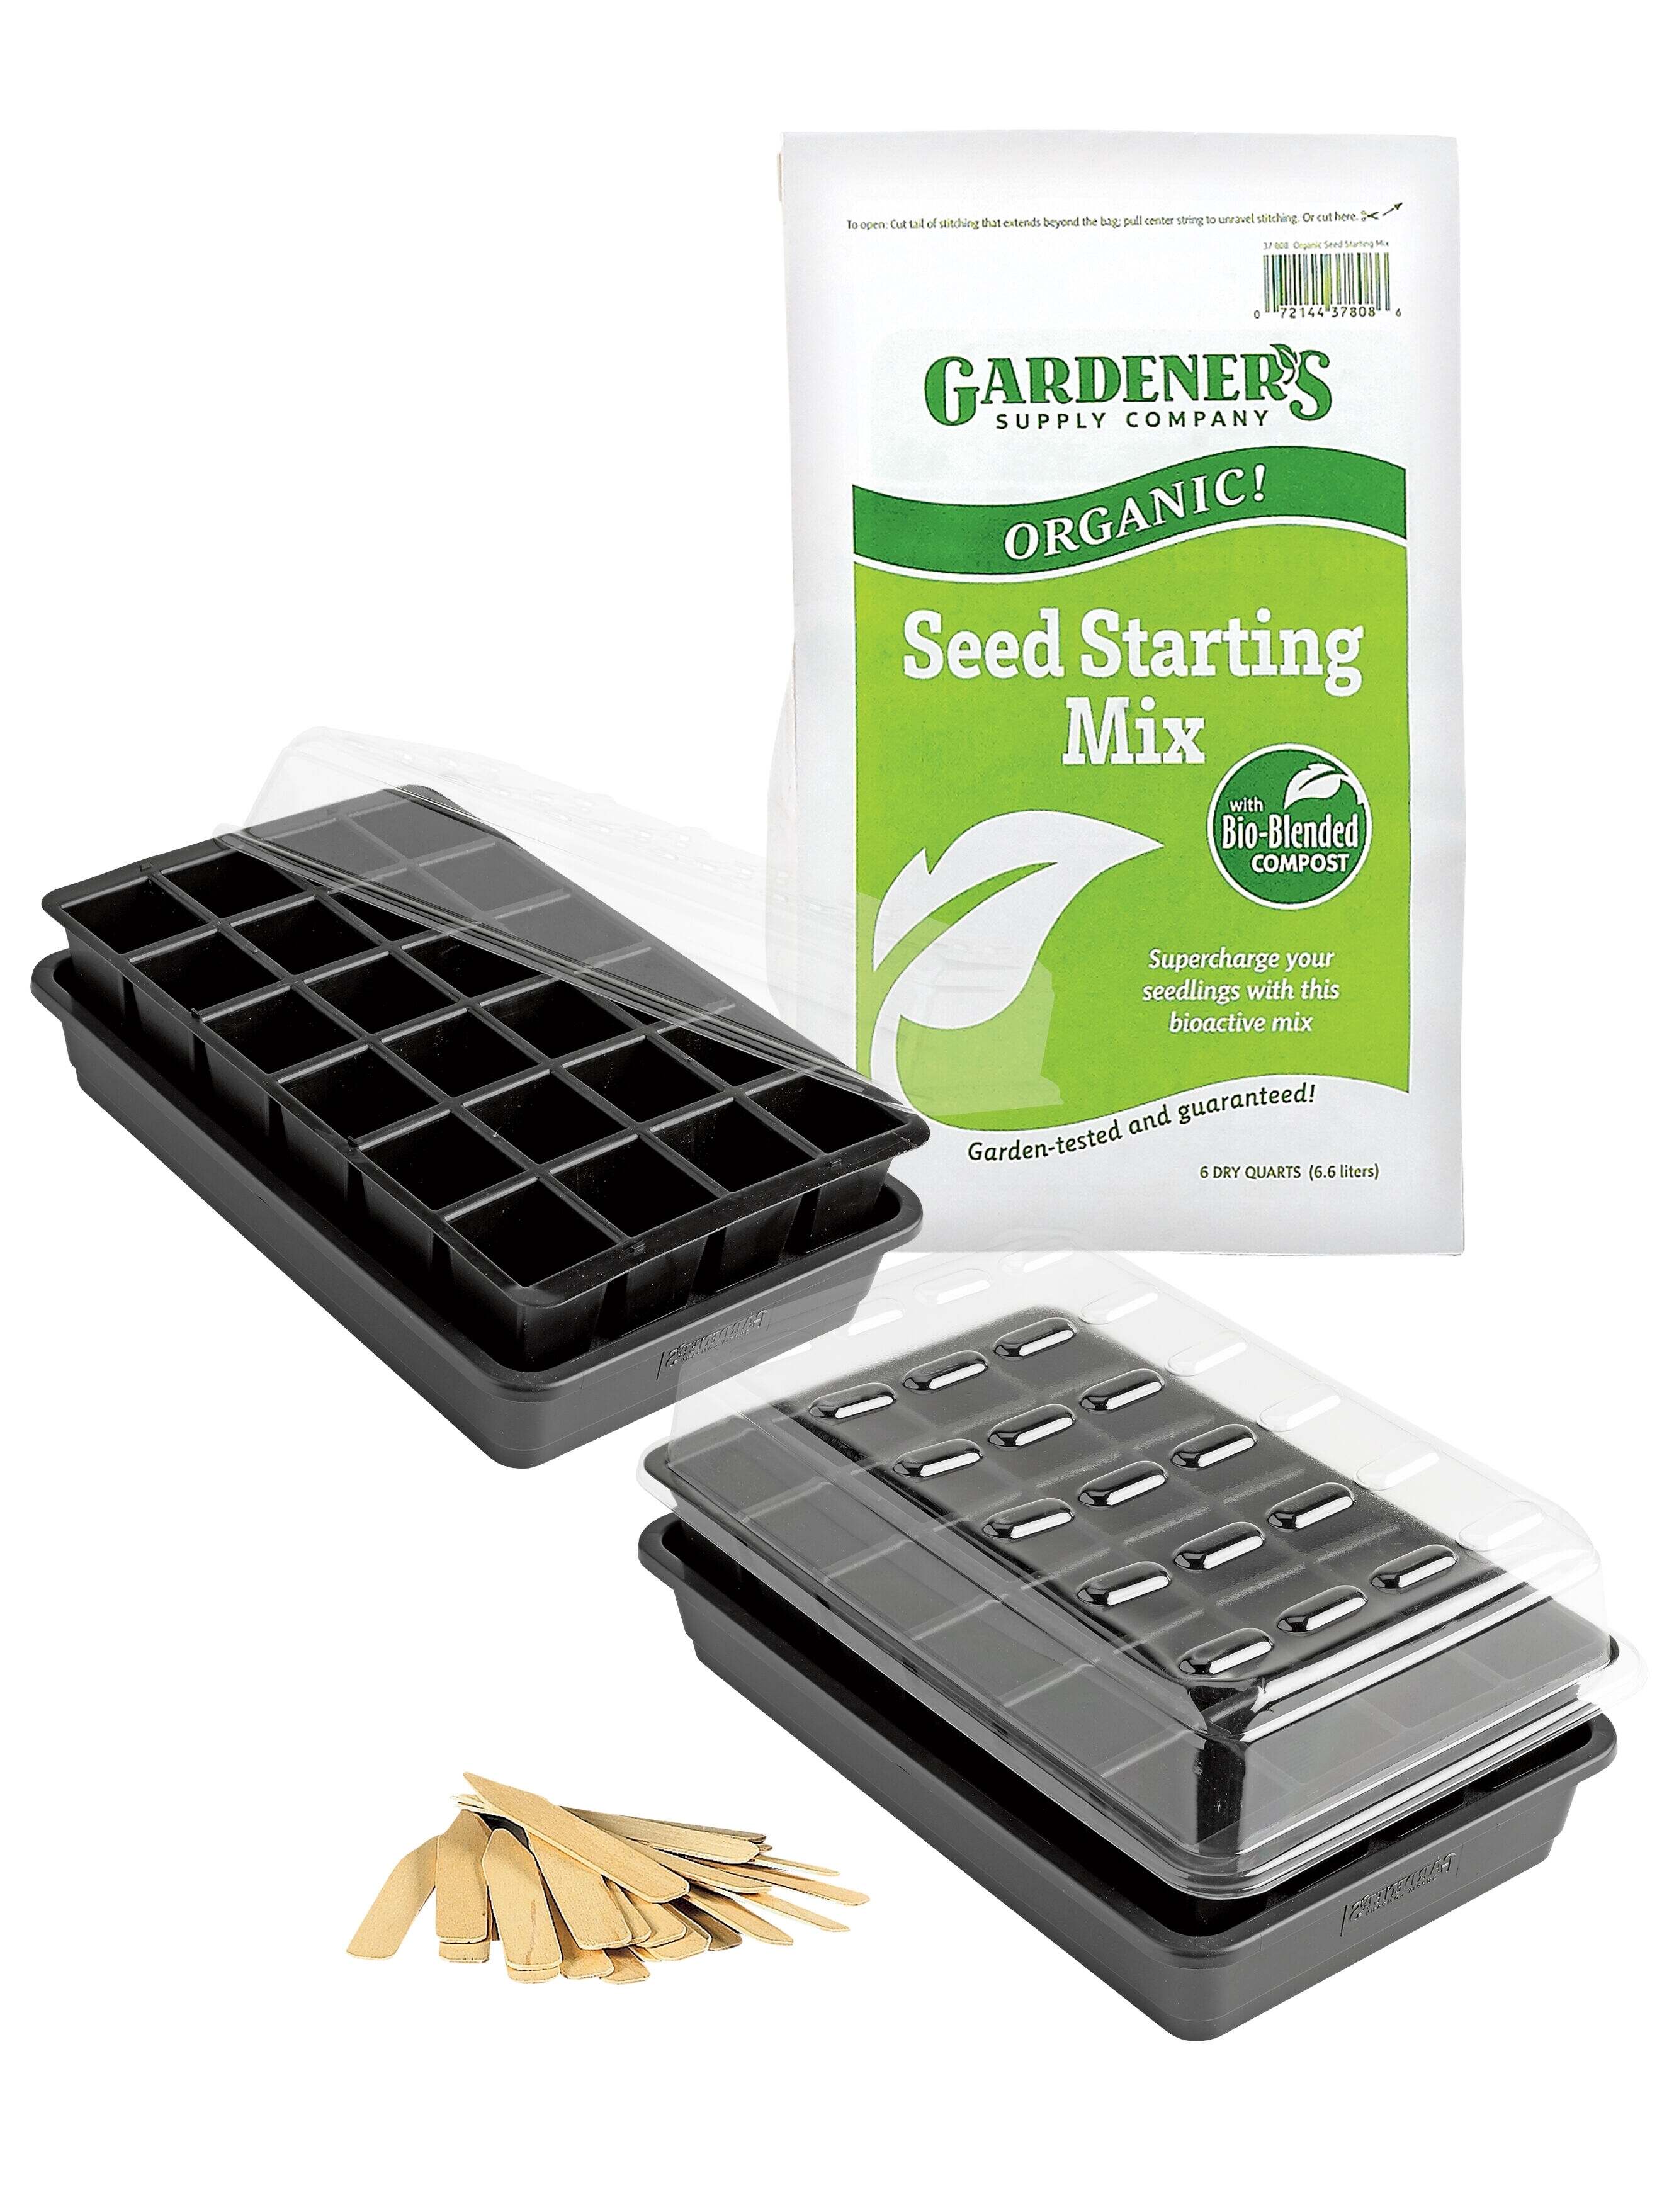 How to Start Seeds - Germinating Seeds | Gardener's Supply